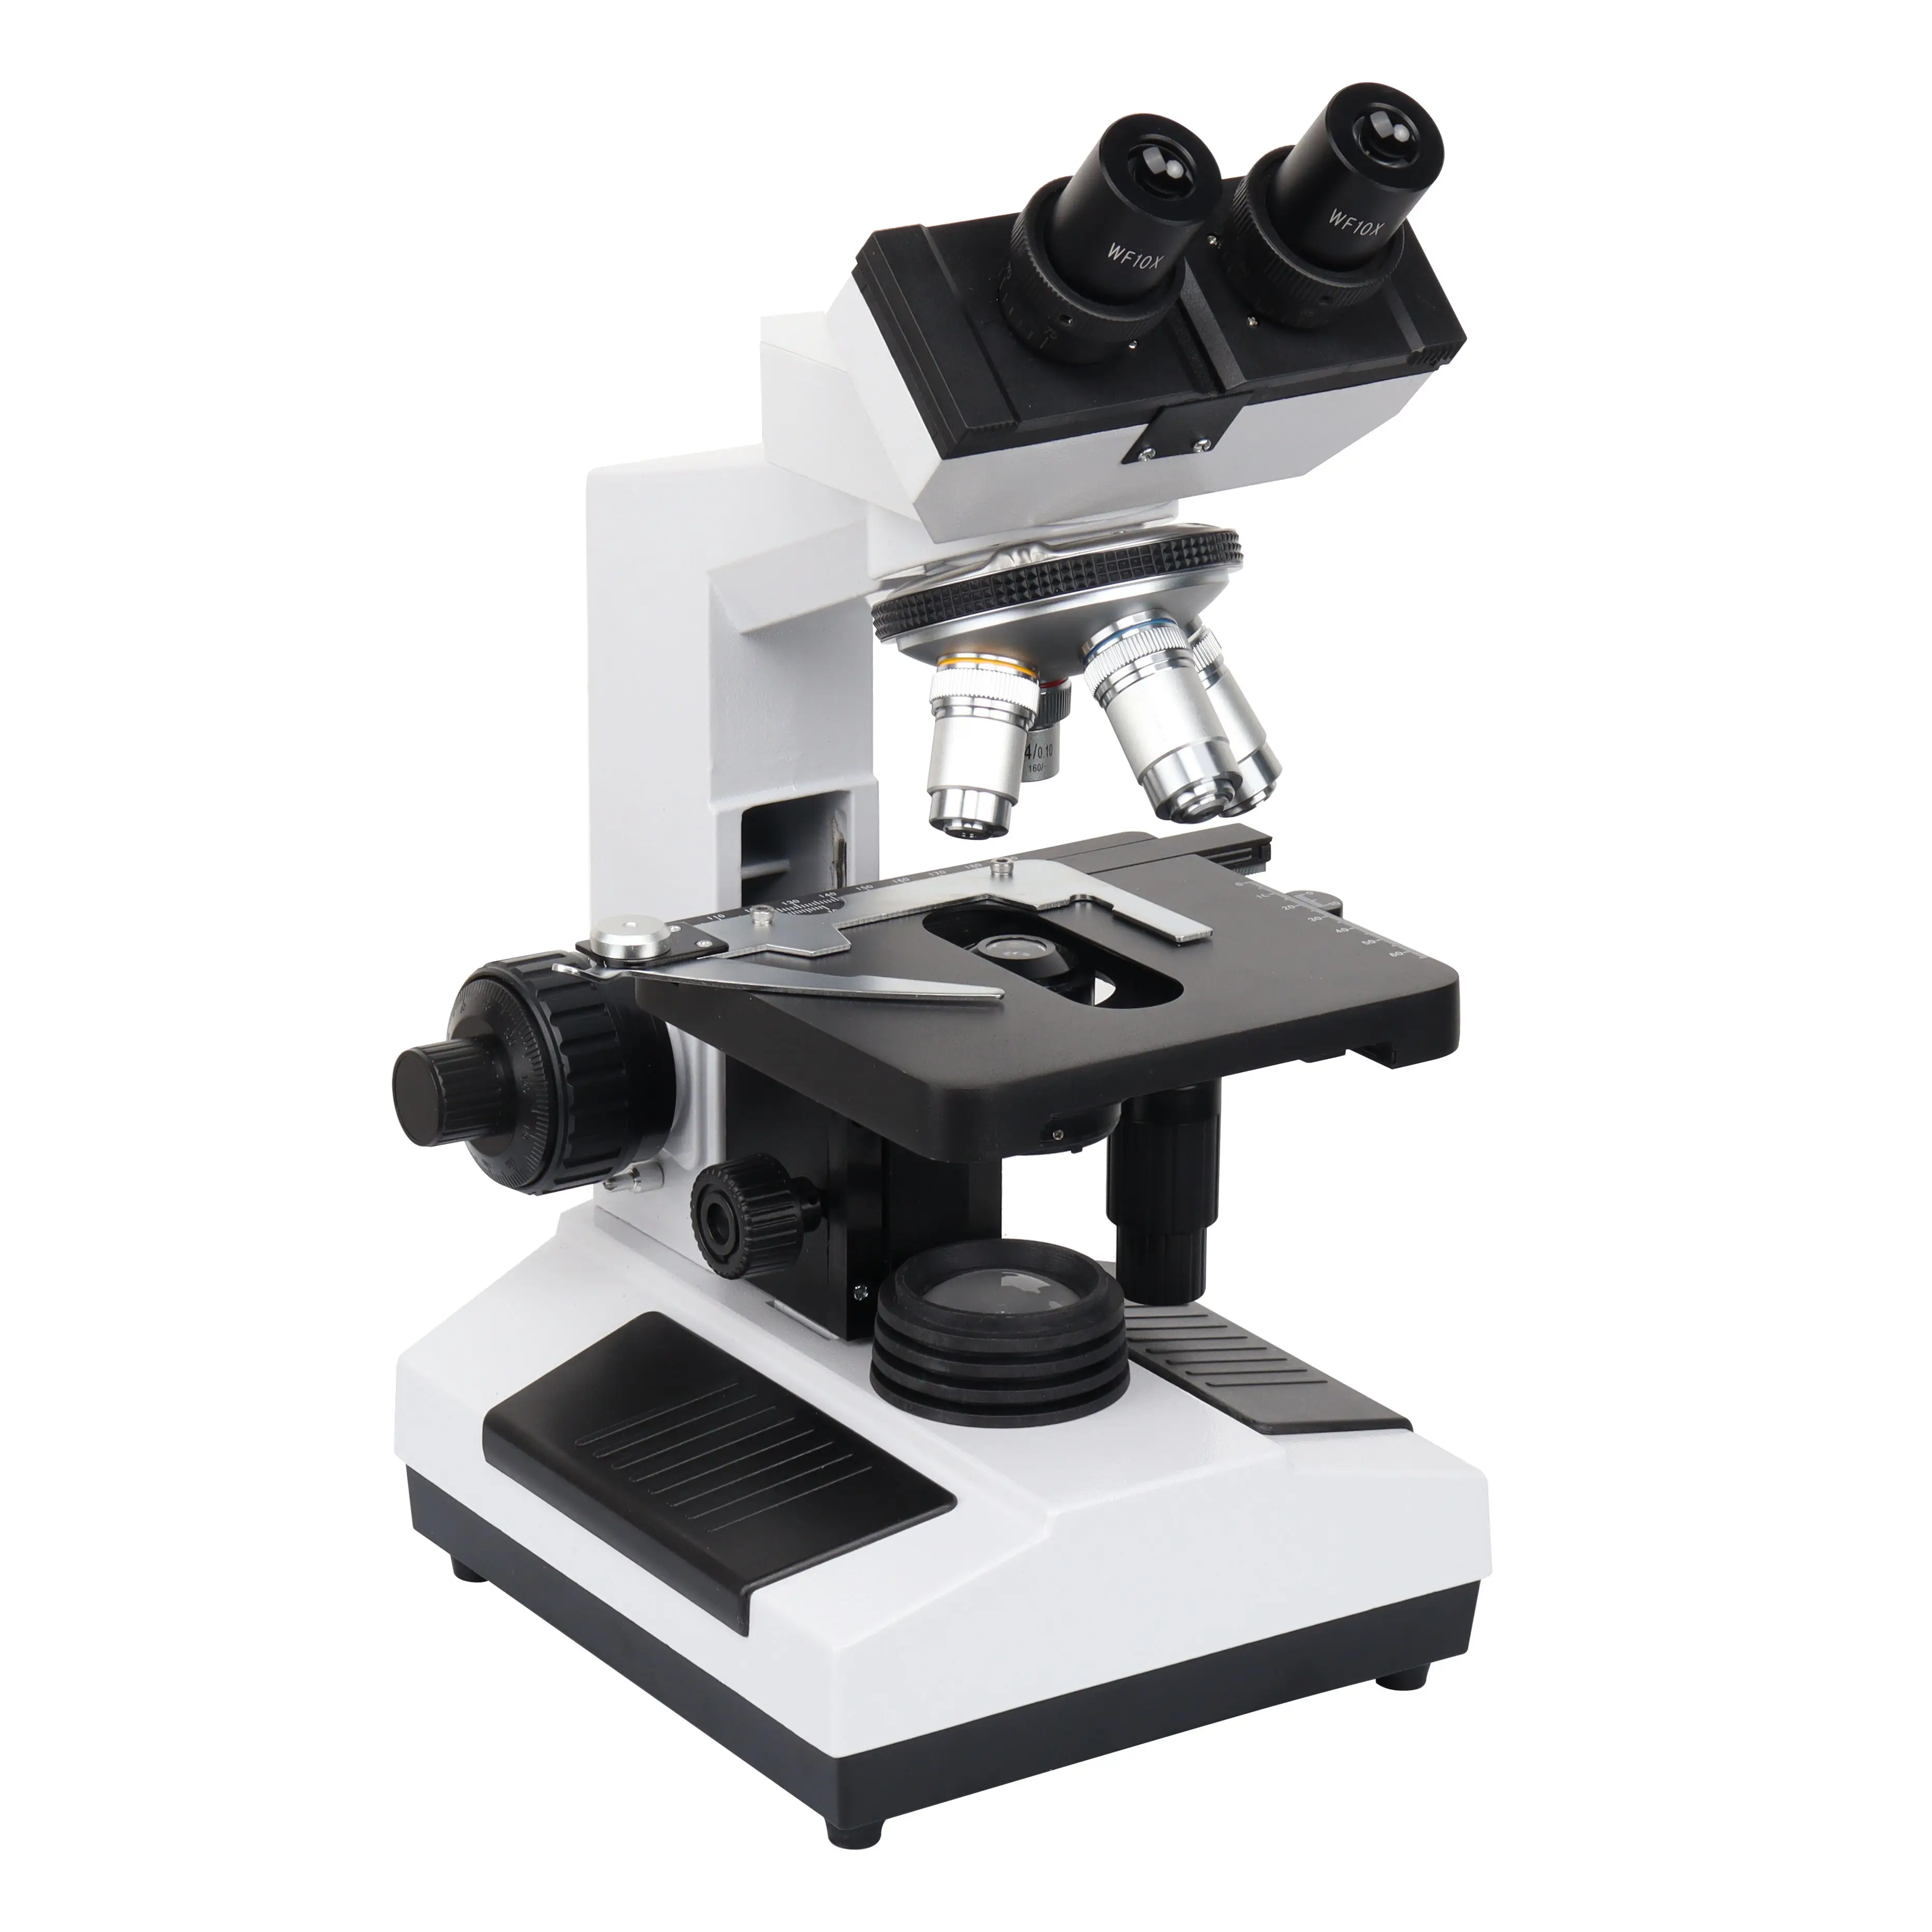 Mikroskop Teropong Laboratorium Medis HXSZ-107BN, Kualitas Terbaik